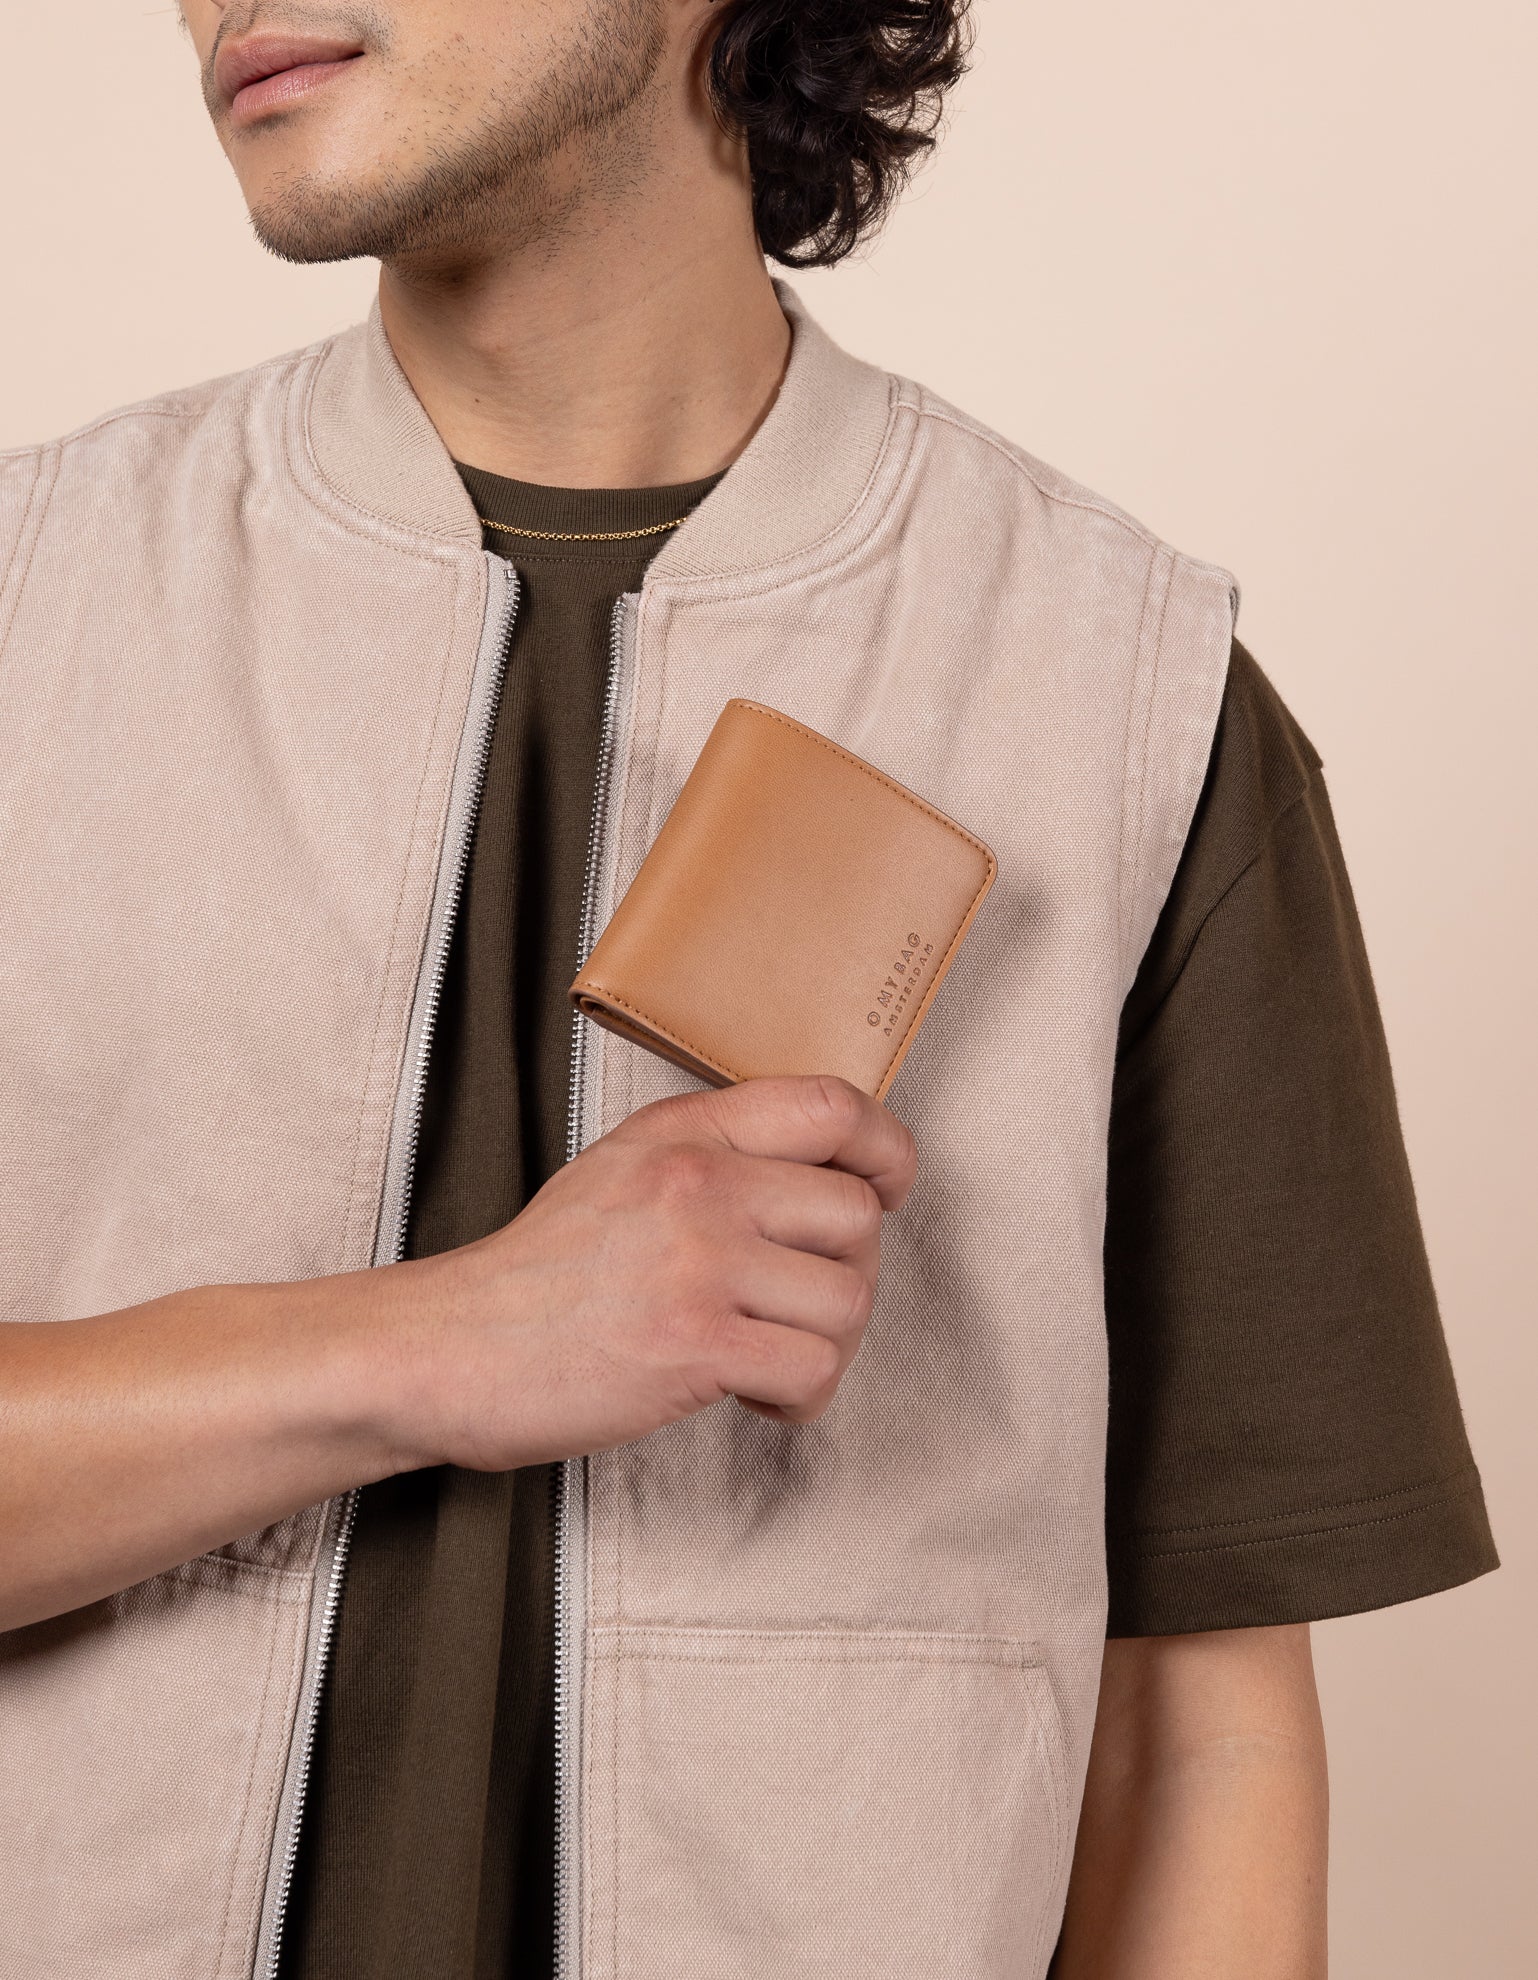 Alex fold over wallet in cognac apple leather - male model image